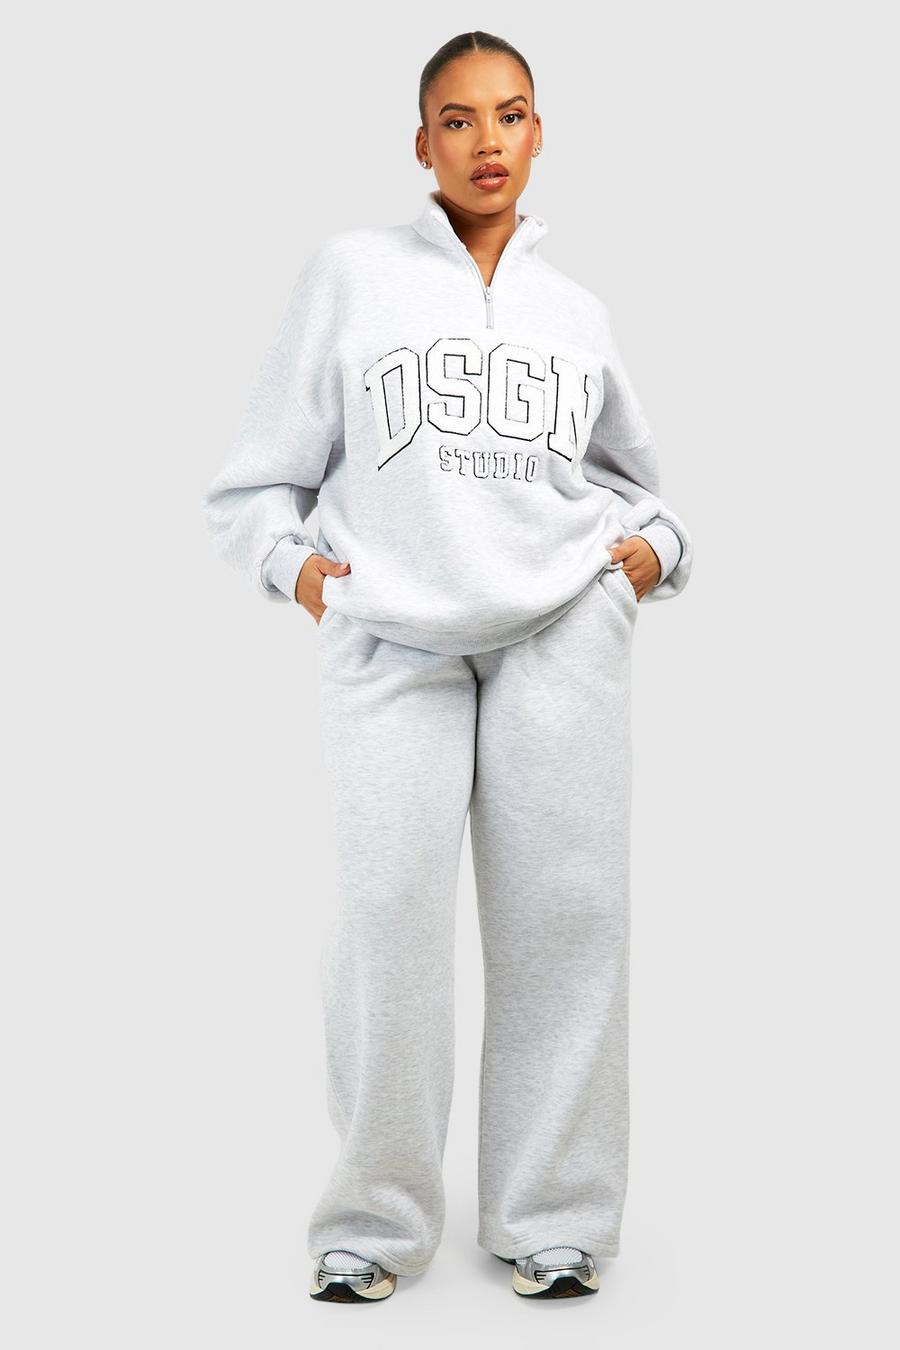 Womens Plus Size Tracksuit Jogging Suits 2 Piece Set Fleece Sweatshirt  Hoodies